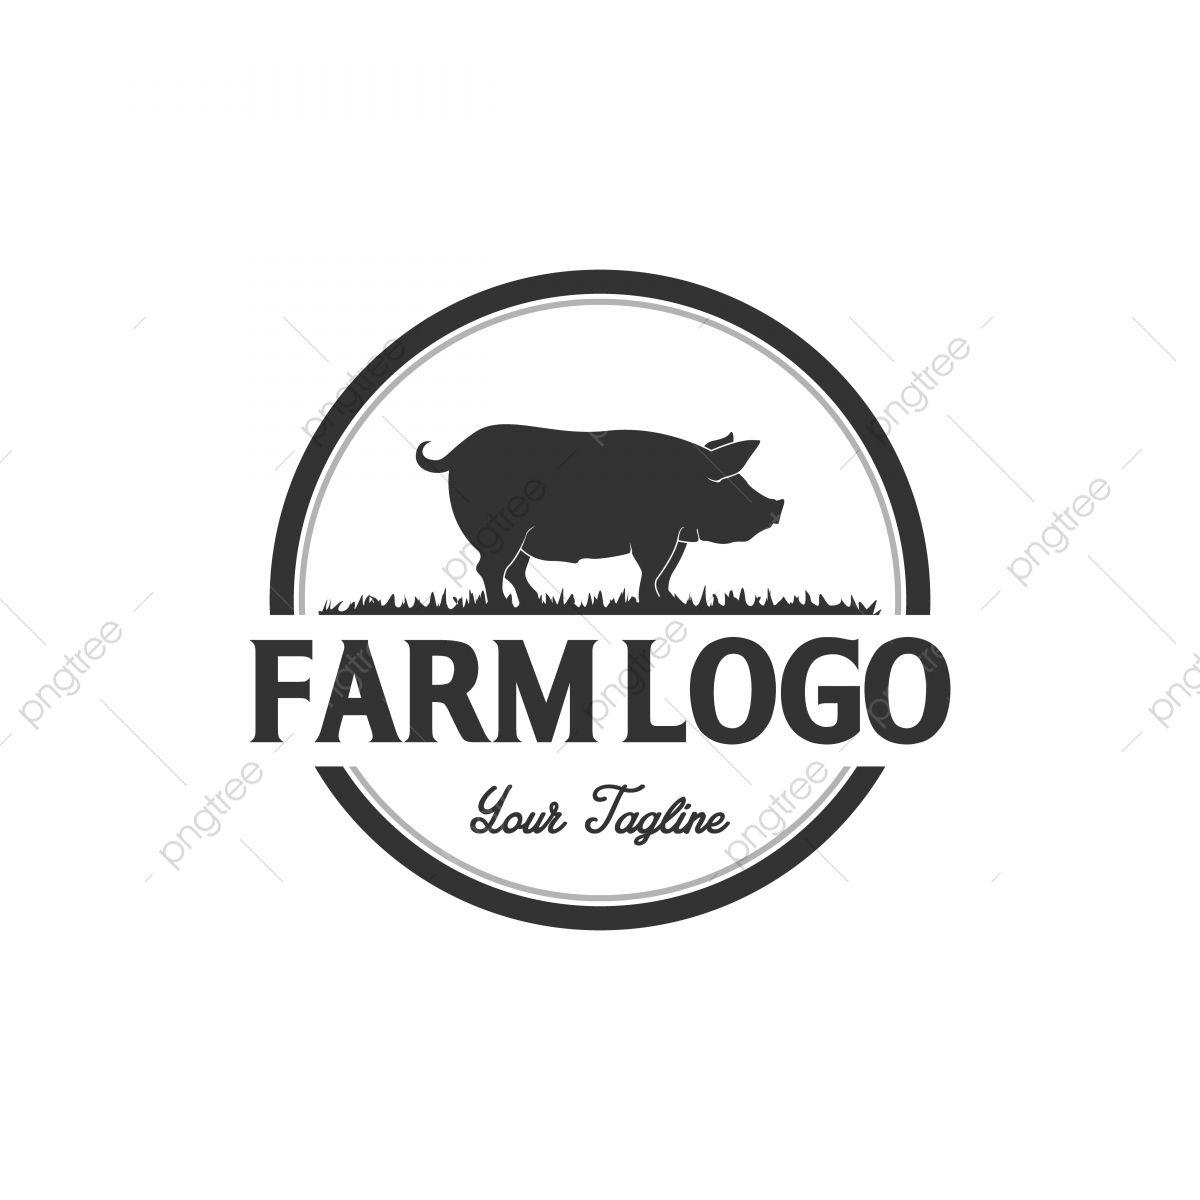 Pork Logo - Pork Logo Designs, Animal, Background, Badge PNG and Vector with ...